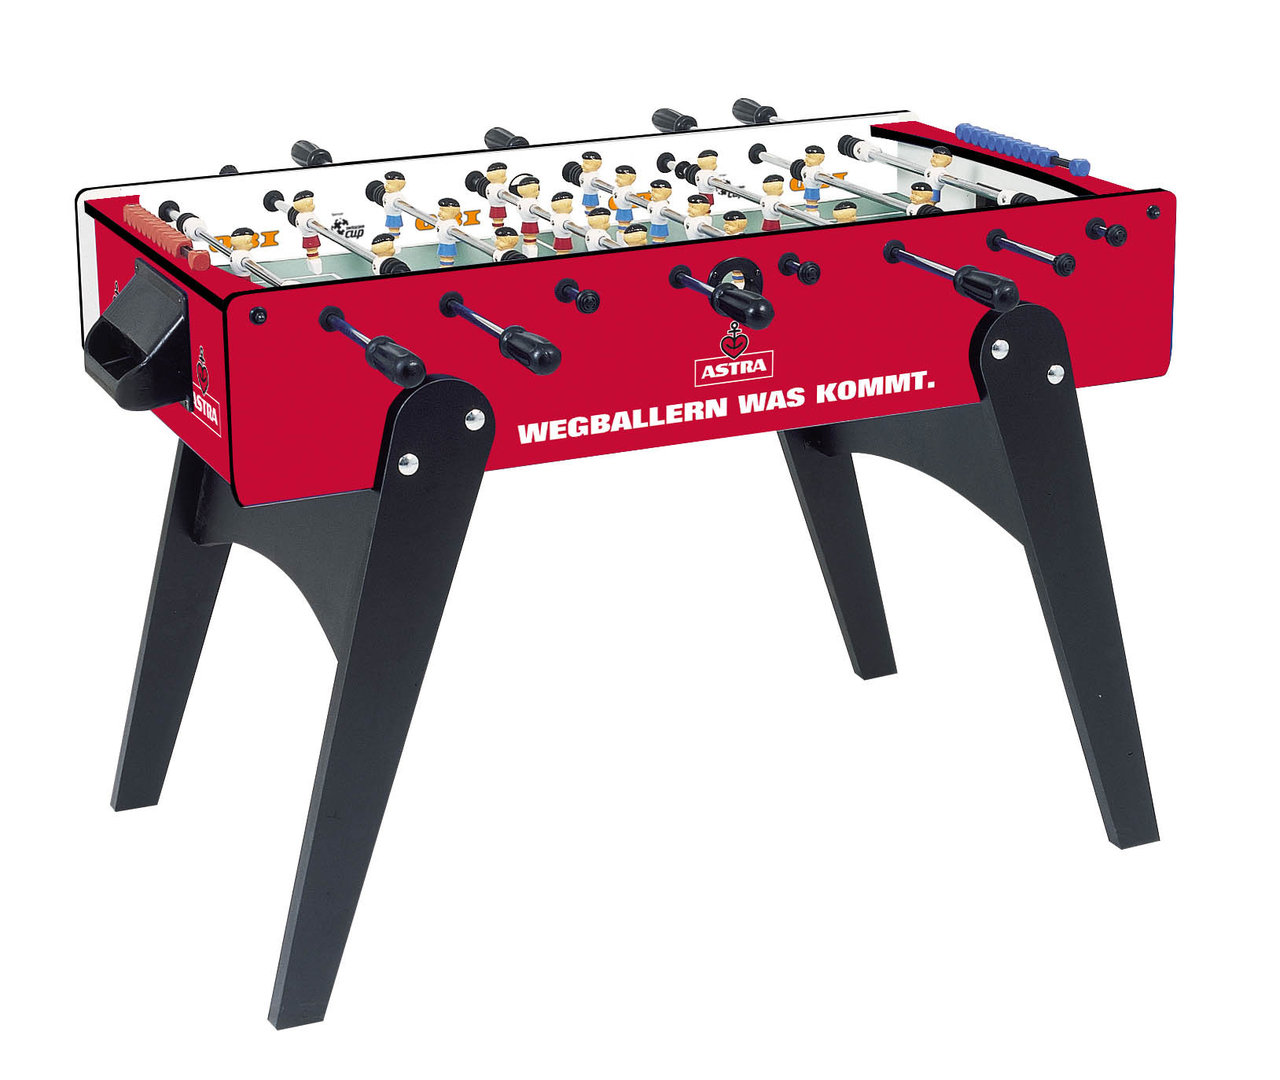 Garlando foosball tables with branding